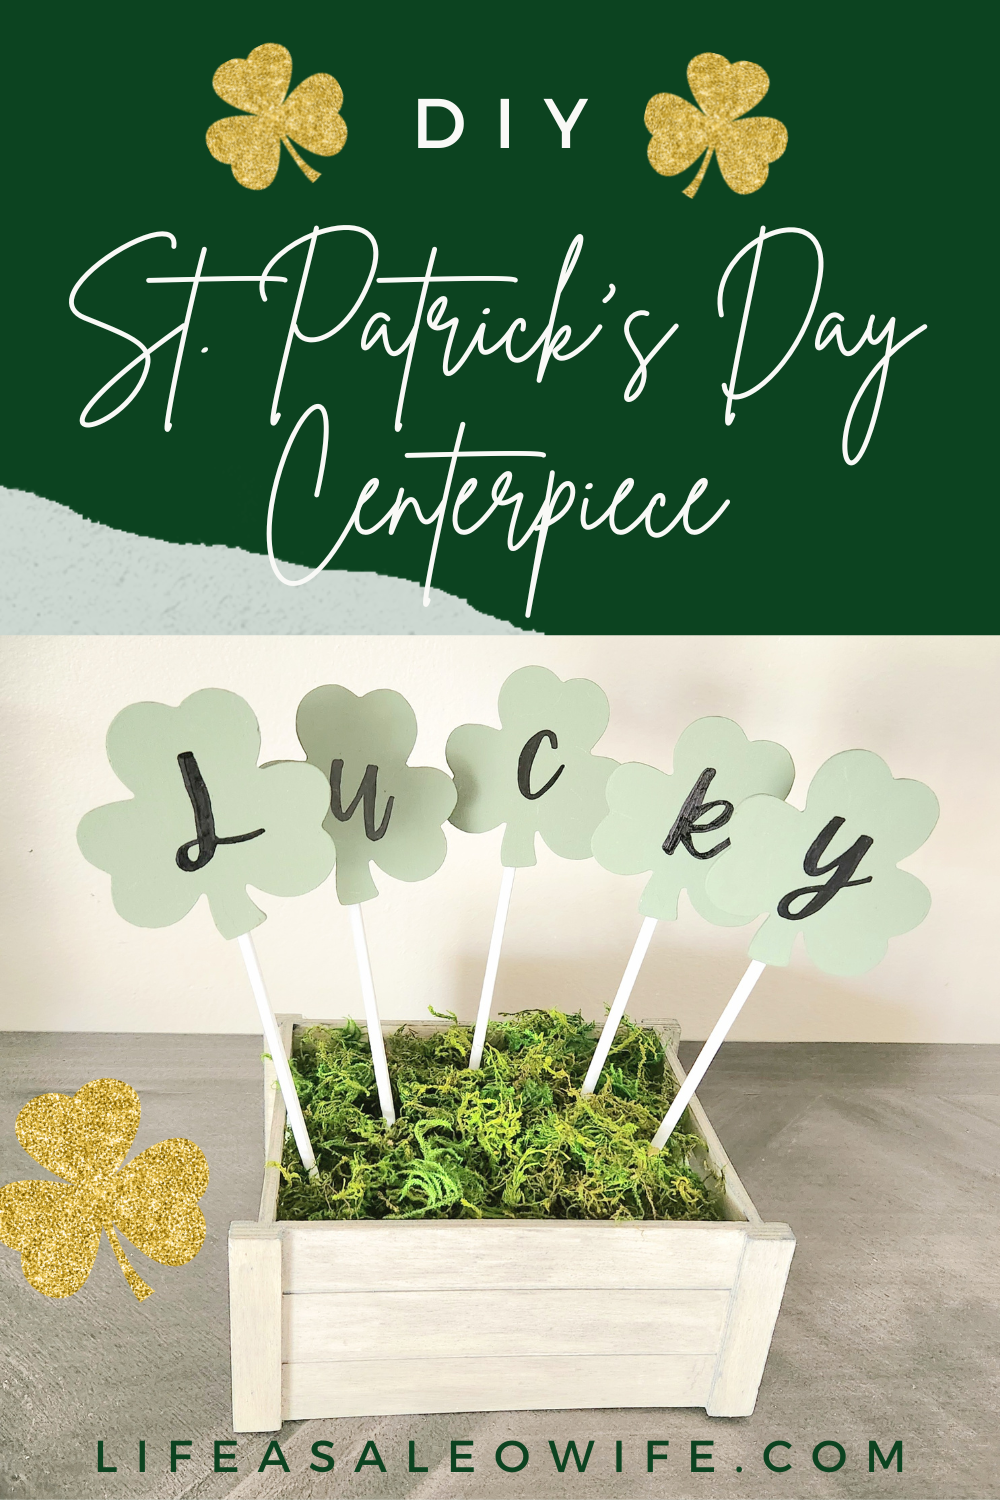 St. Patrick's Day centerpiece Pinterest image